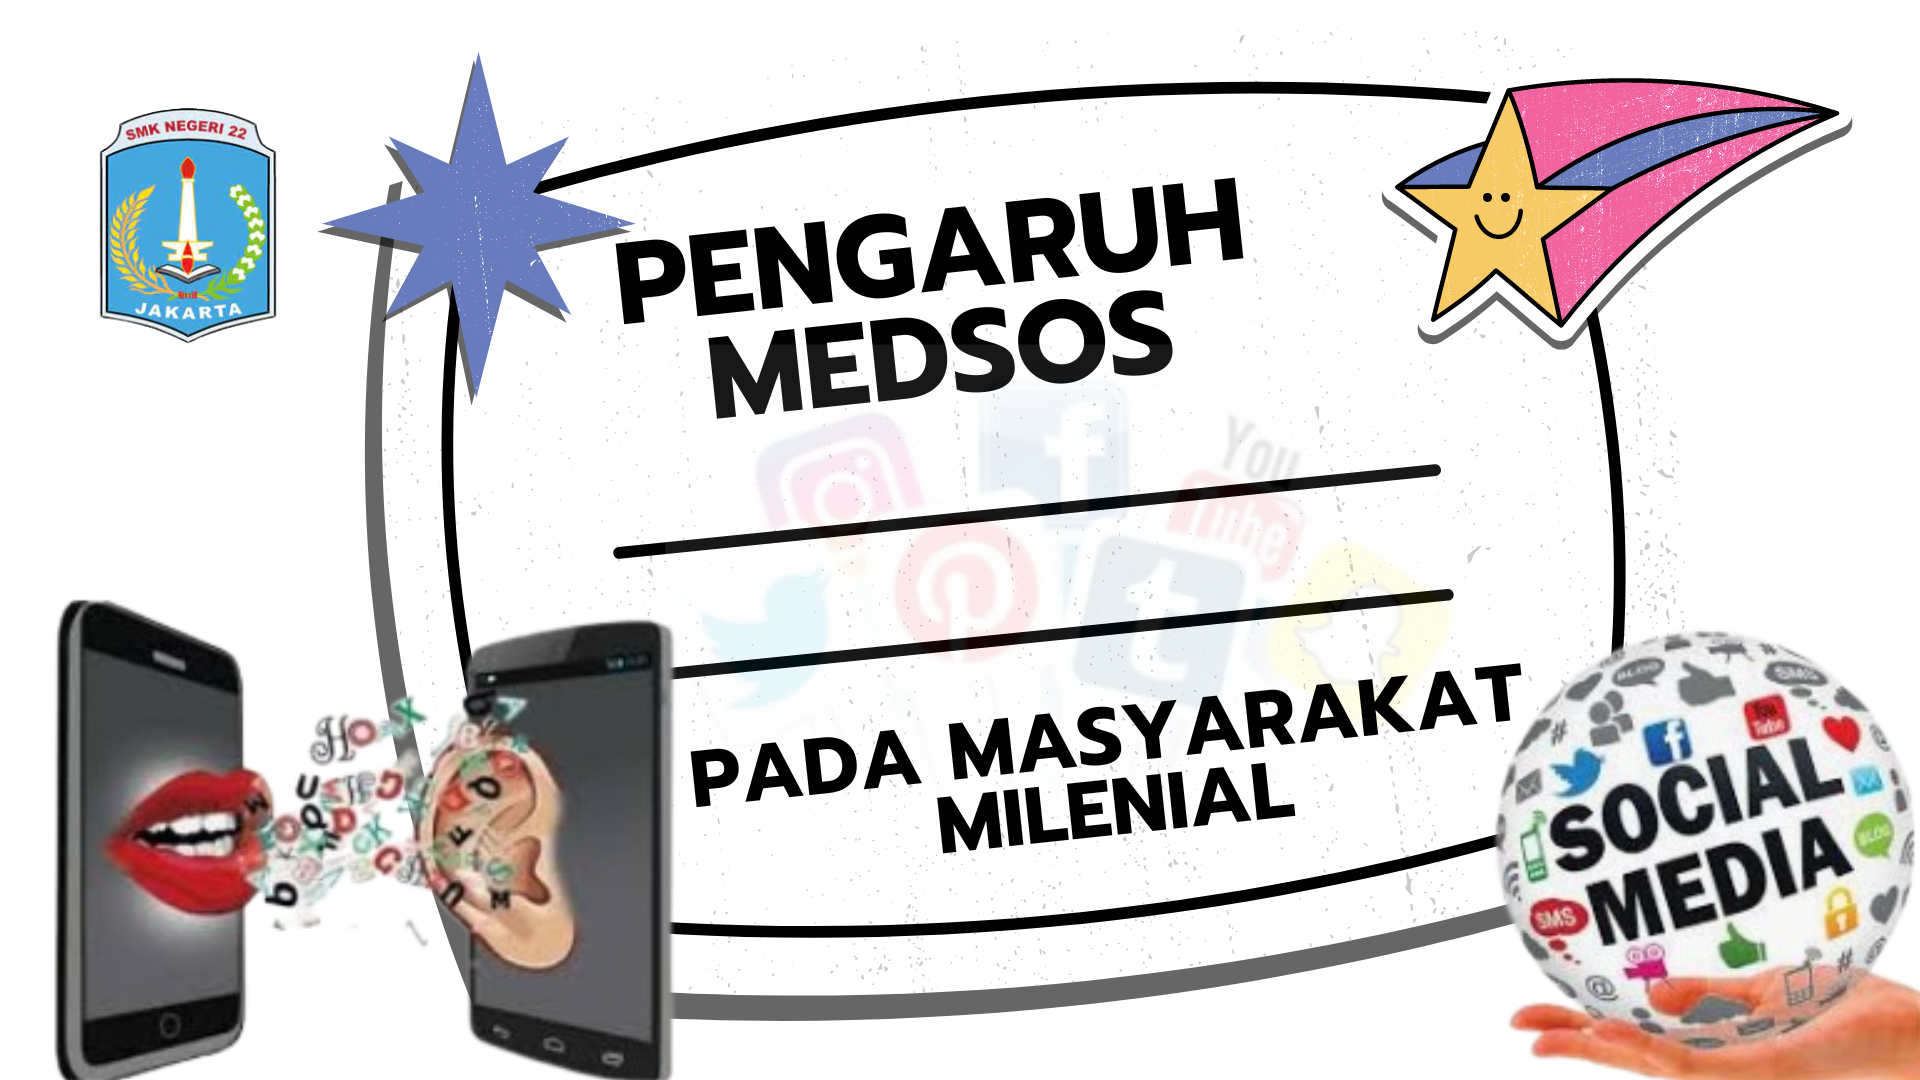 Pengaruh Media Sosial Terhadap Masyarakat Milenial – SMK Negeri 22 Jakarta